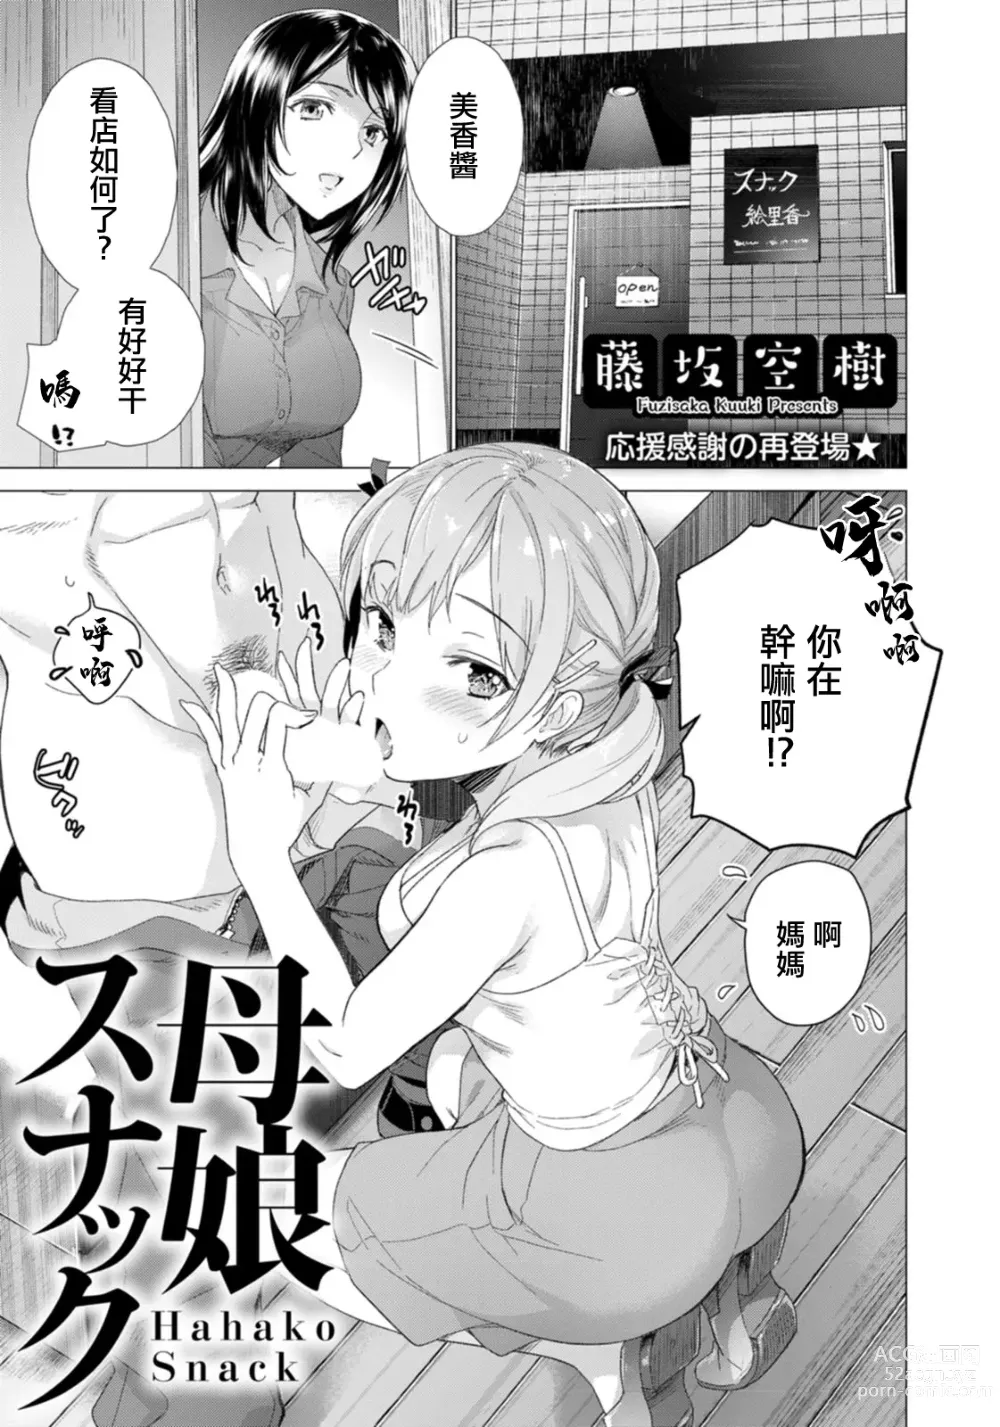 Page 1 of manga Hahako Snack